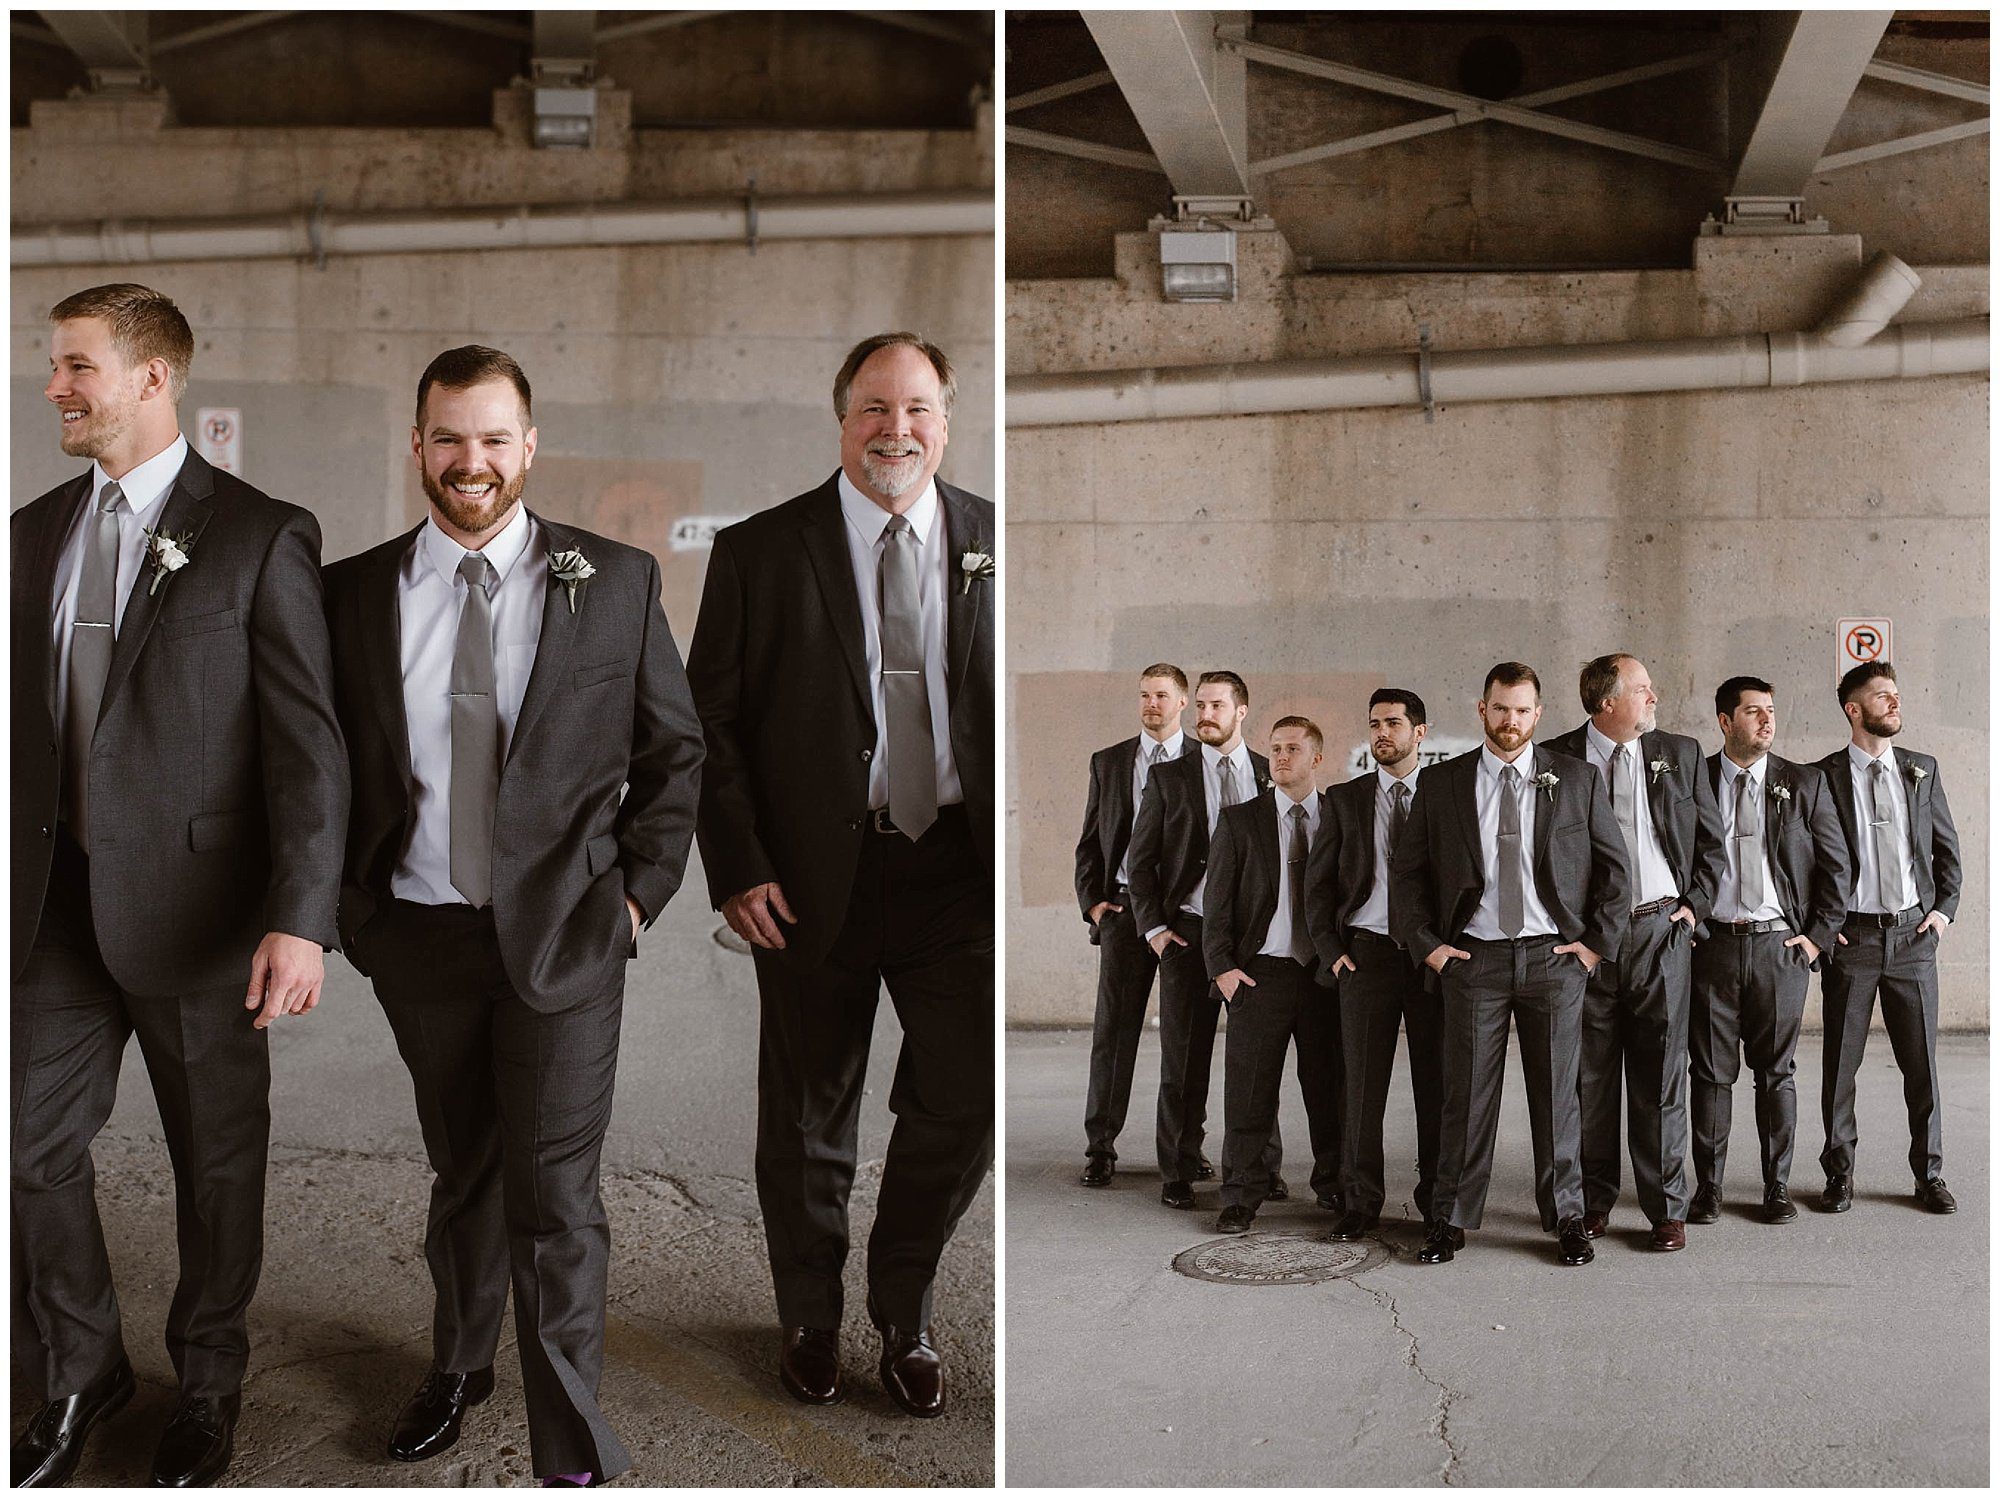 Candid groomsmen photos at wedding